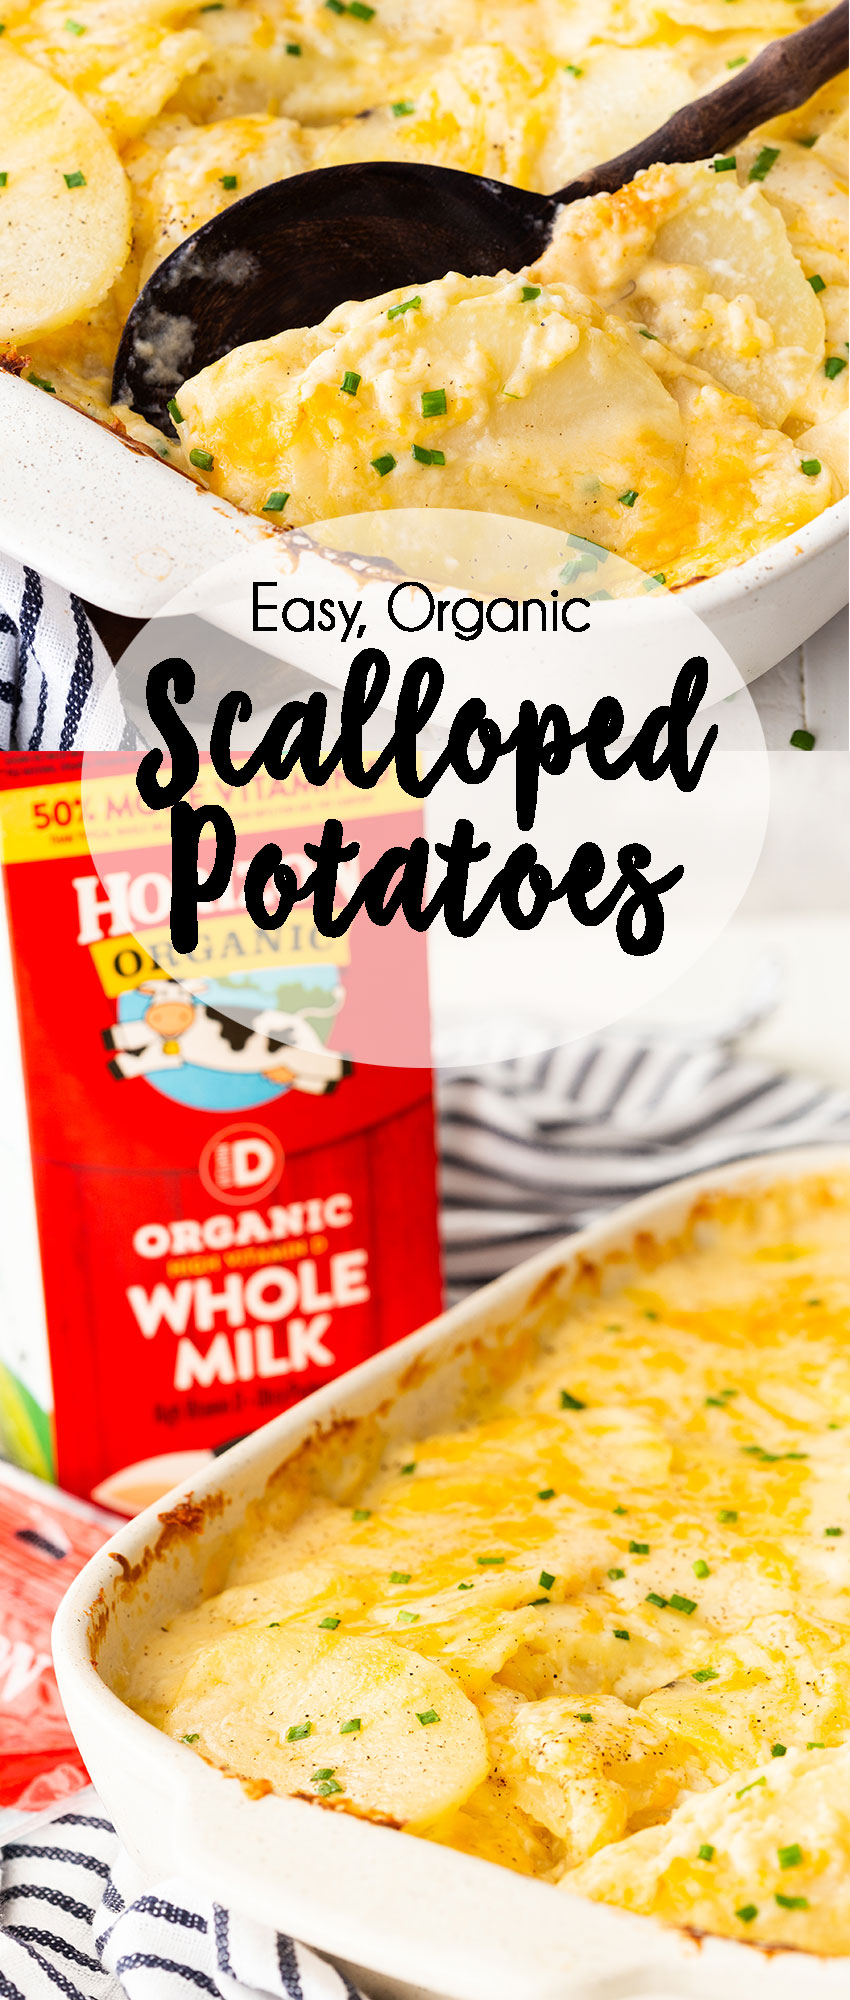 Easy organic scalloped potatoes